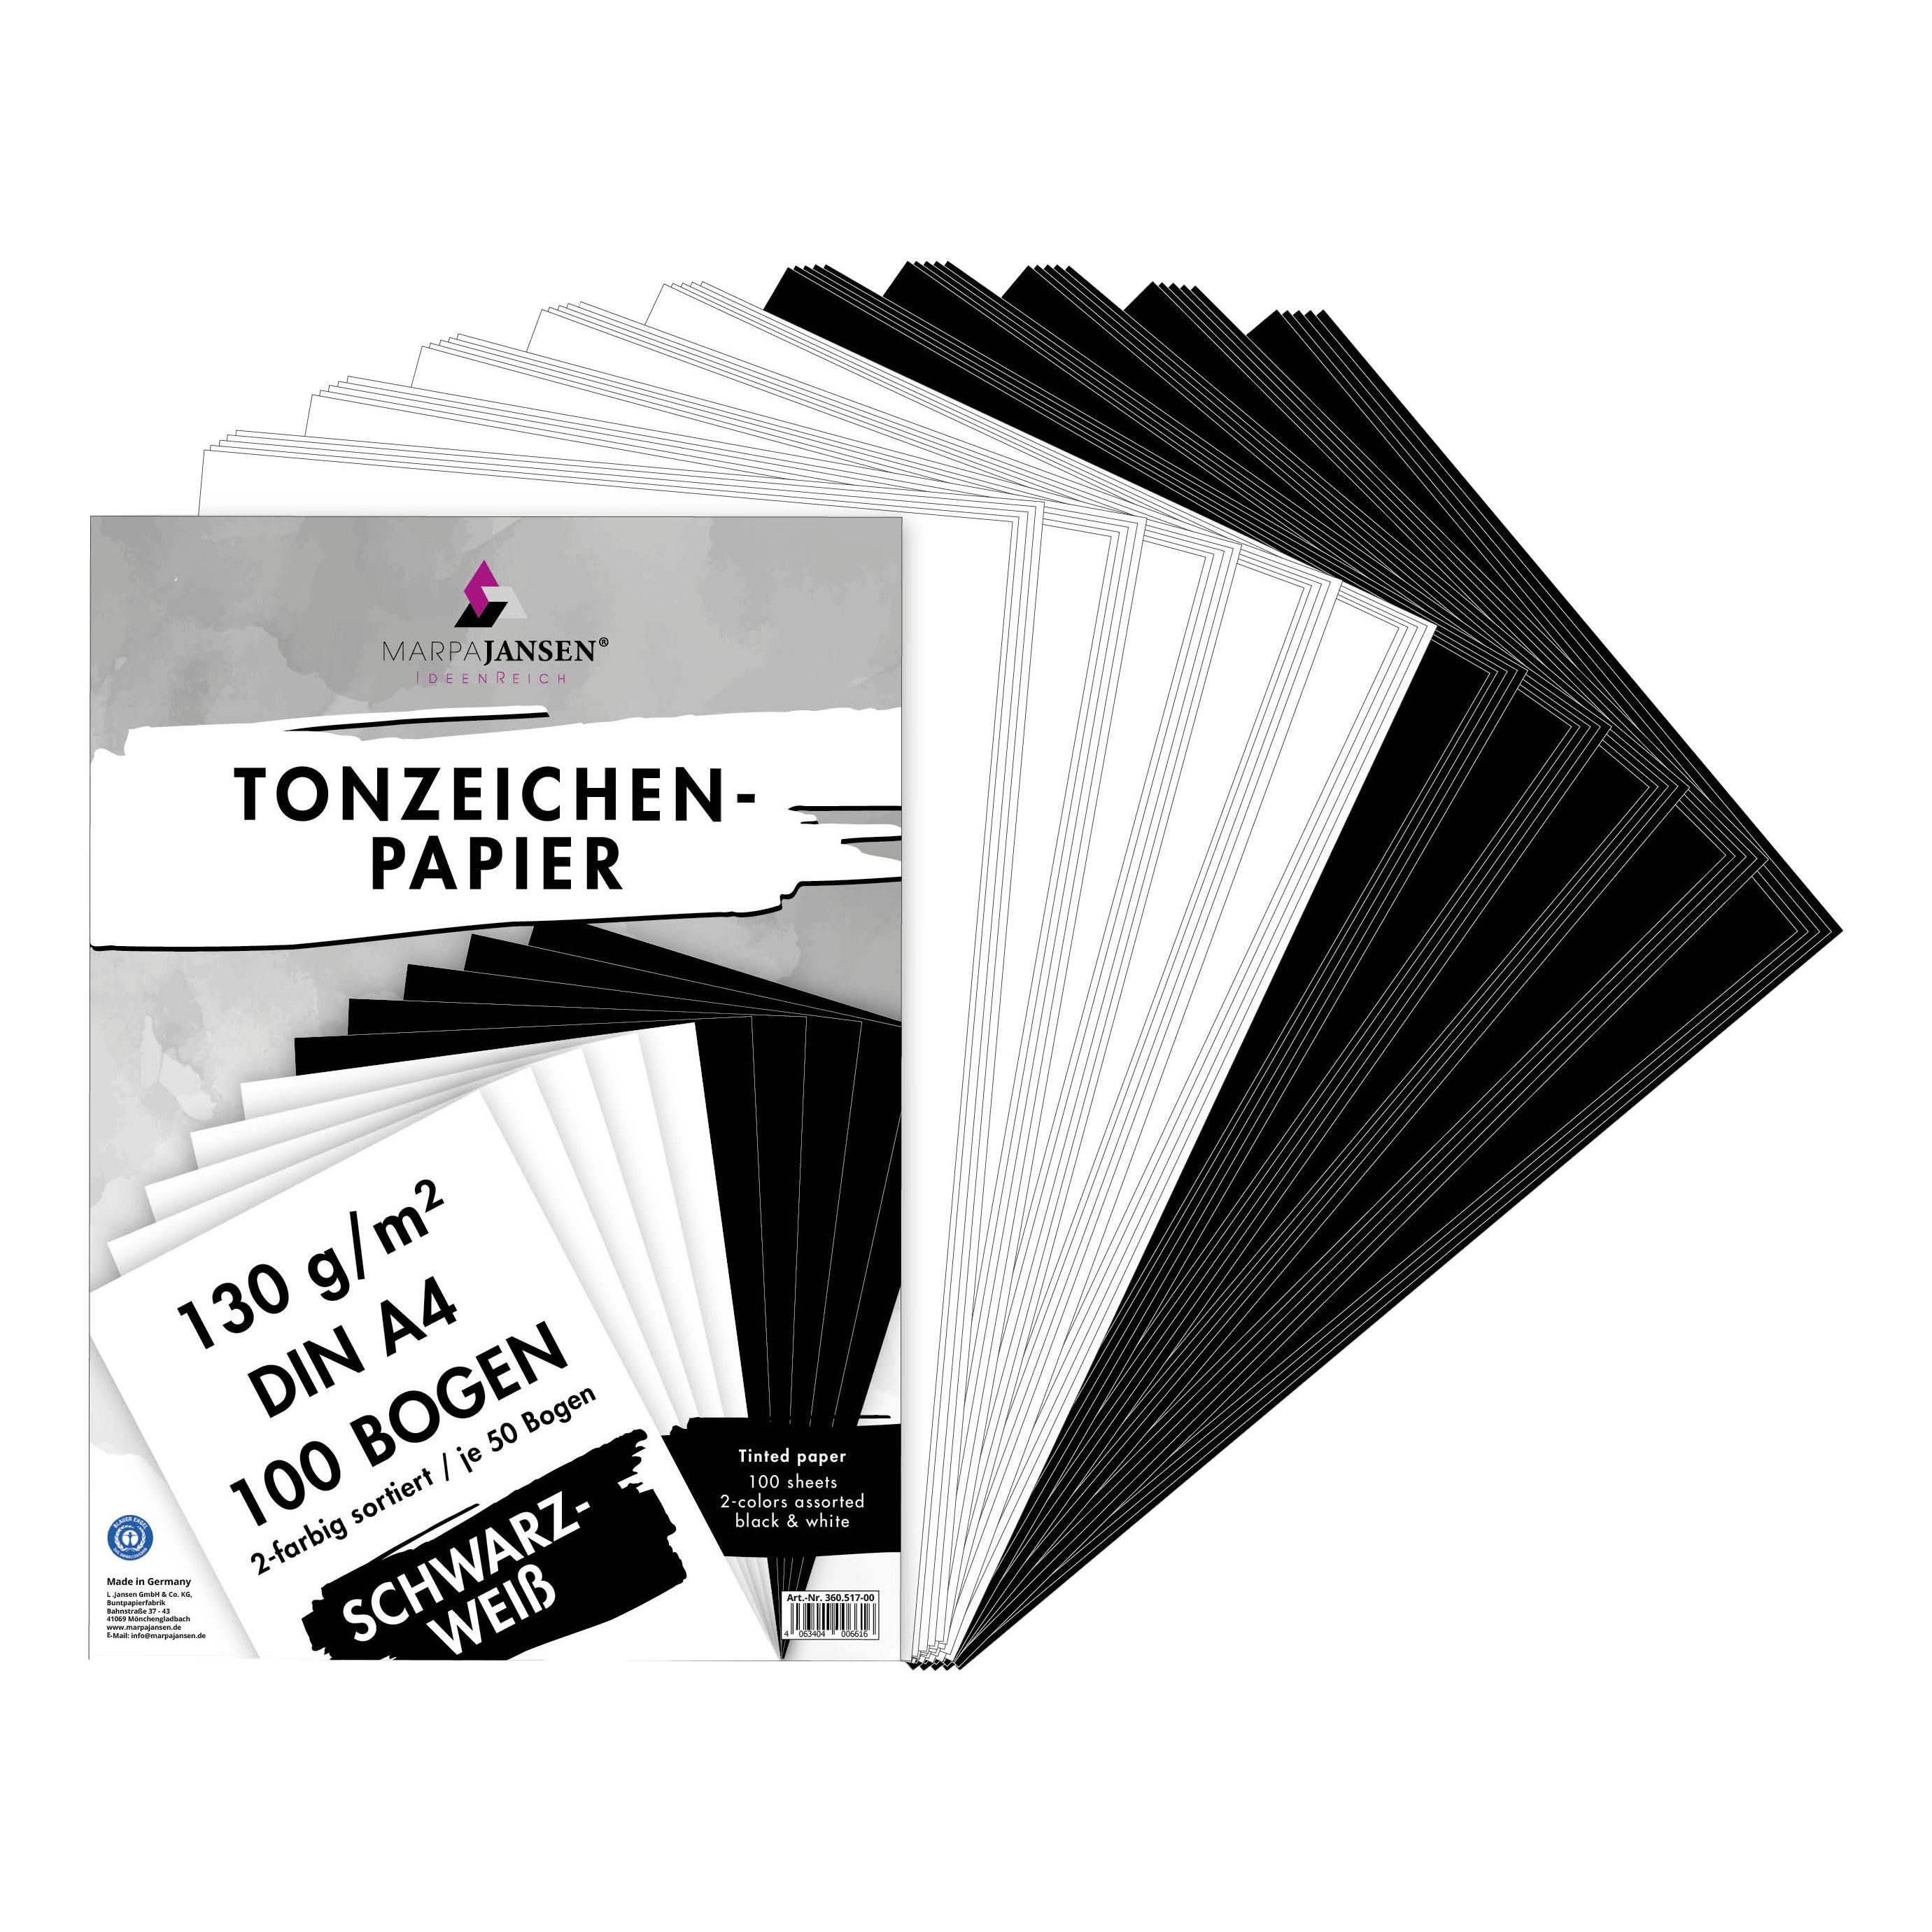 Tonpapier-Sortierung Schwarz-Weiß, MarpaJansen Blatt 100 Papierkarton